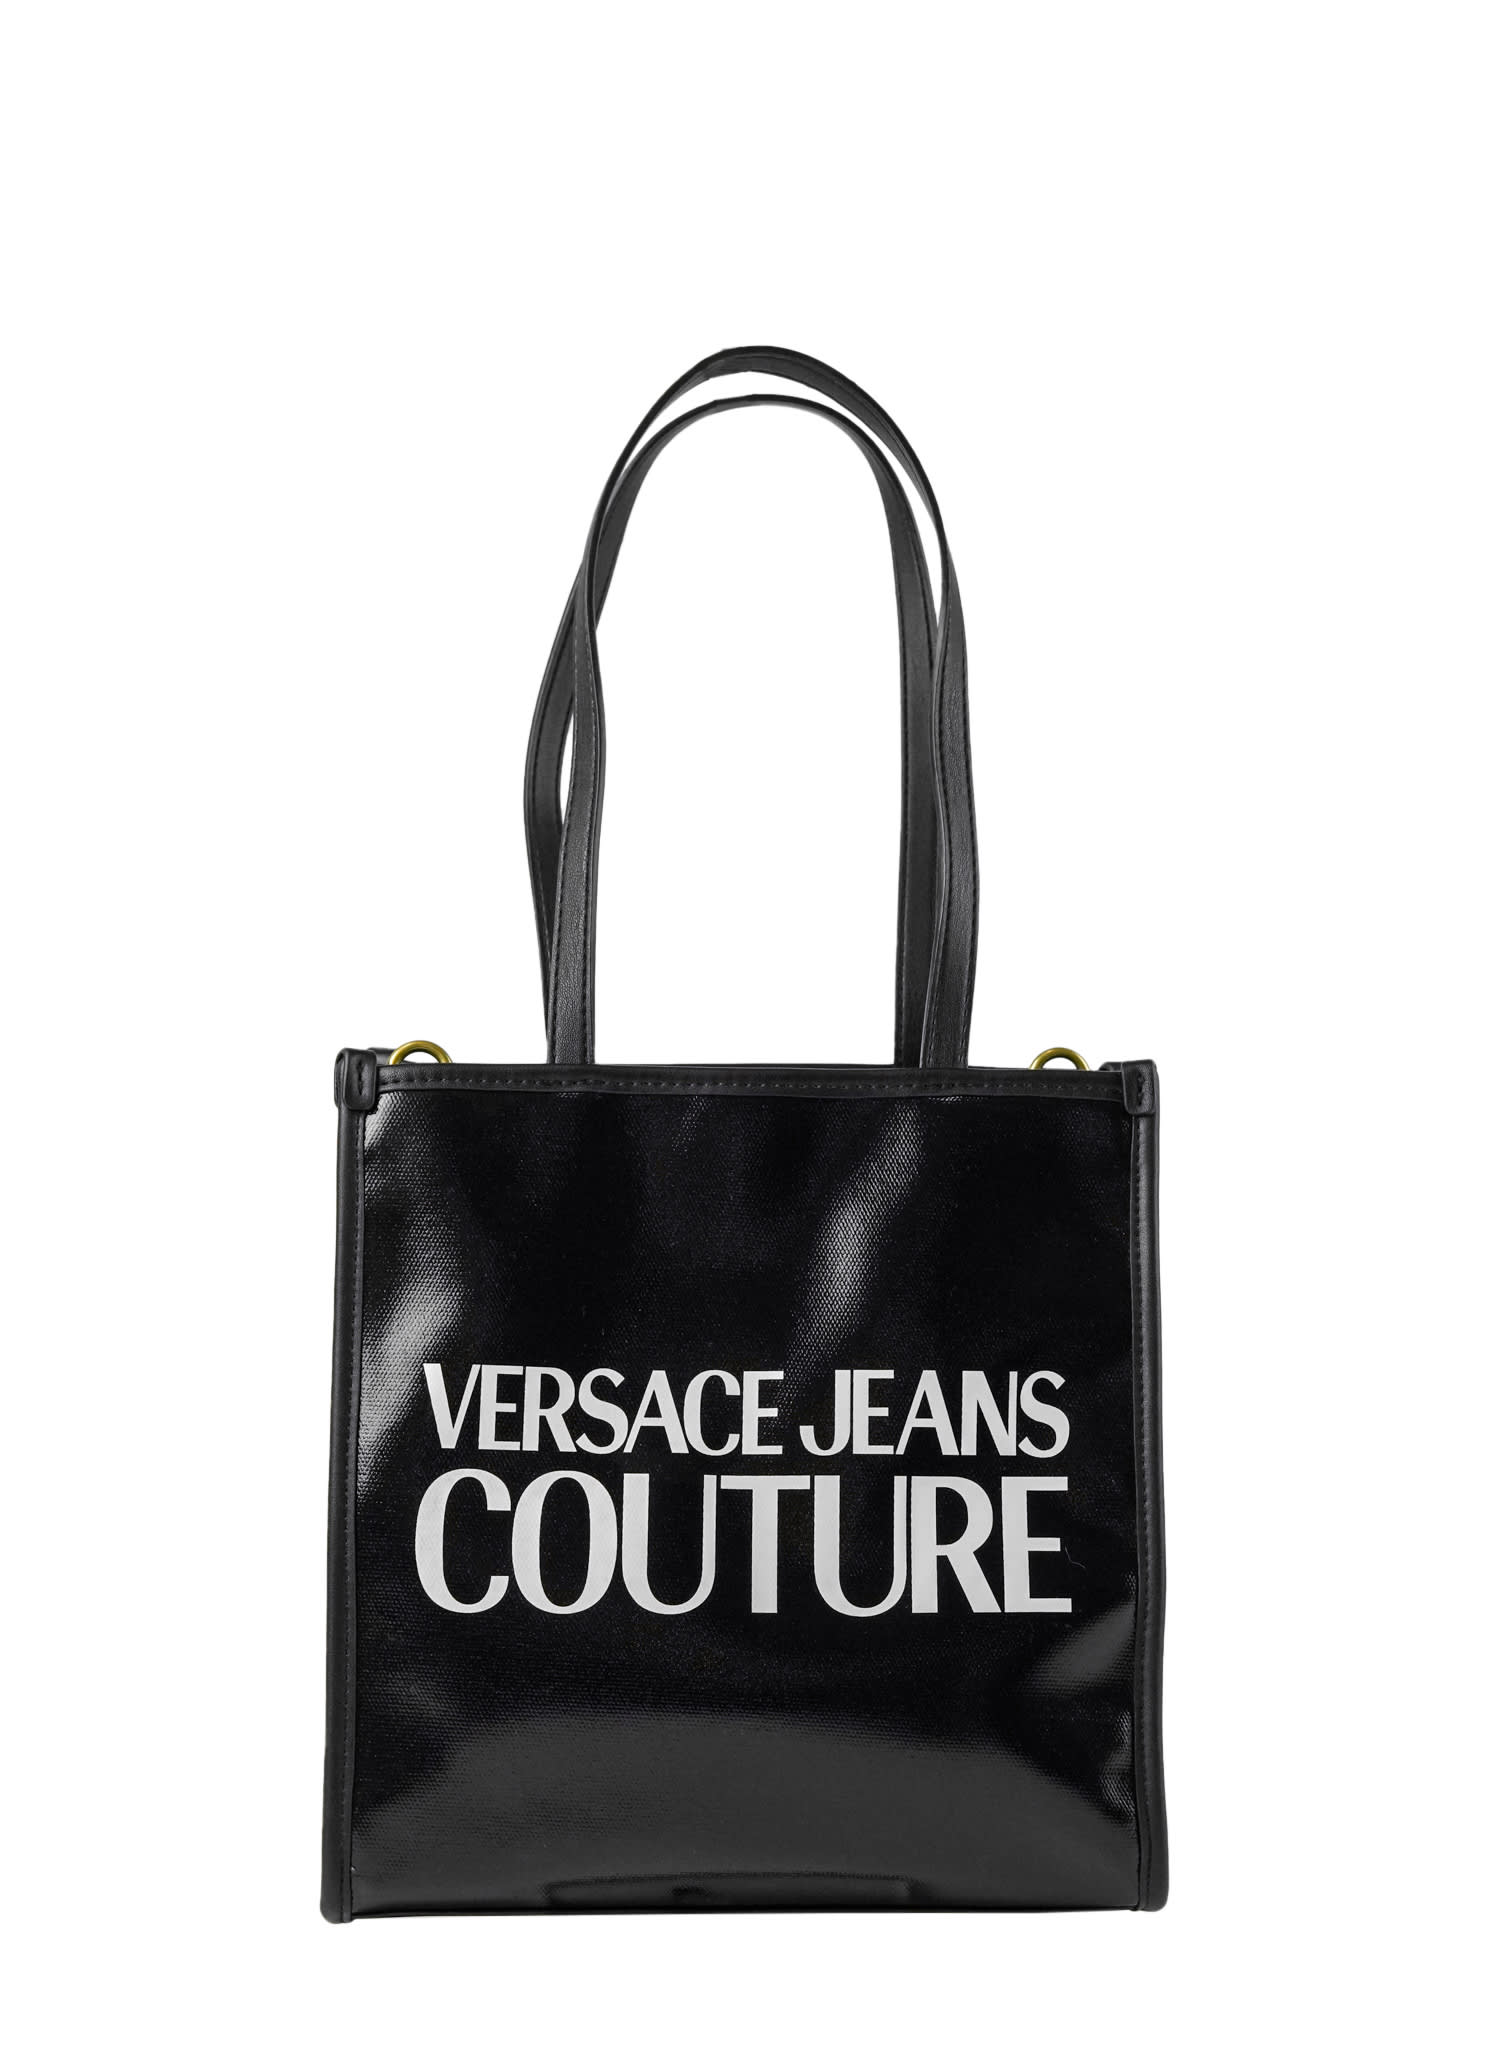 Versace Jeans Couture Canvas Tote Shoulder Bag